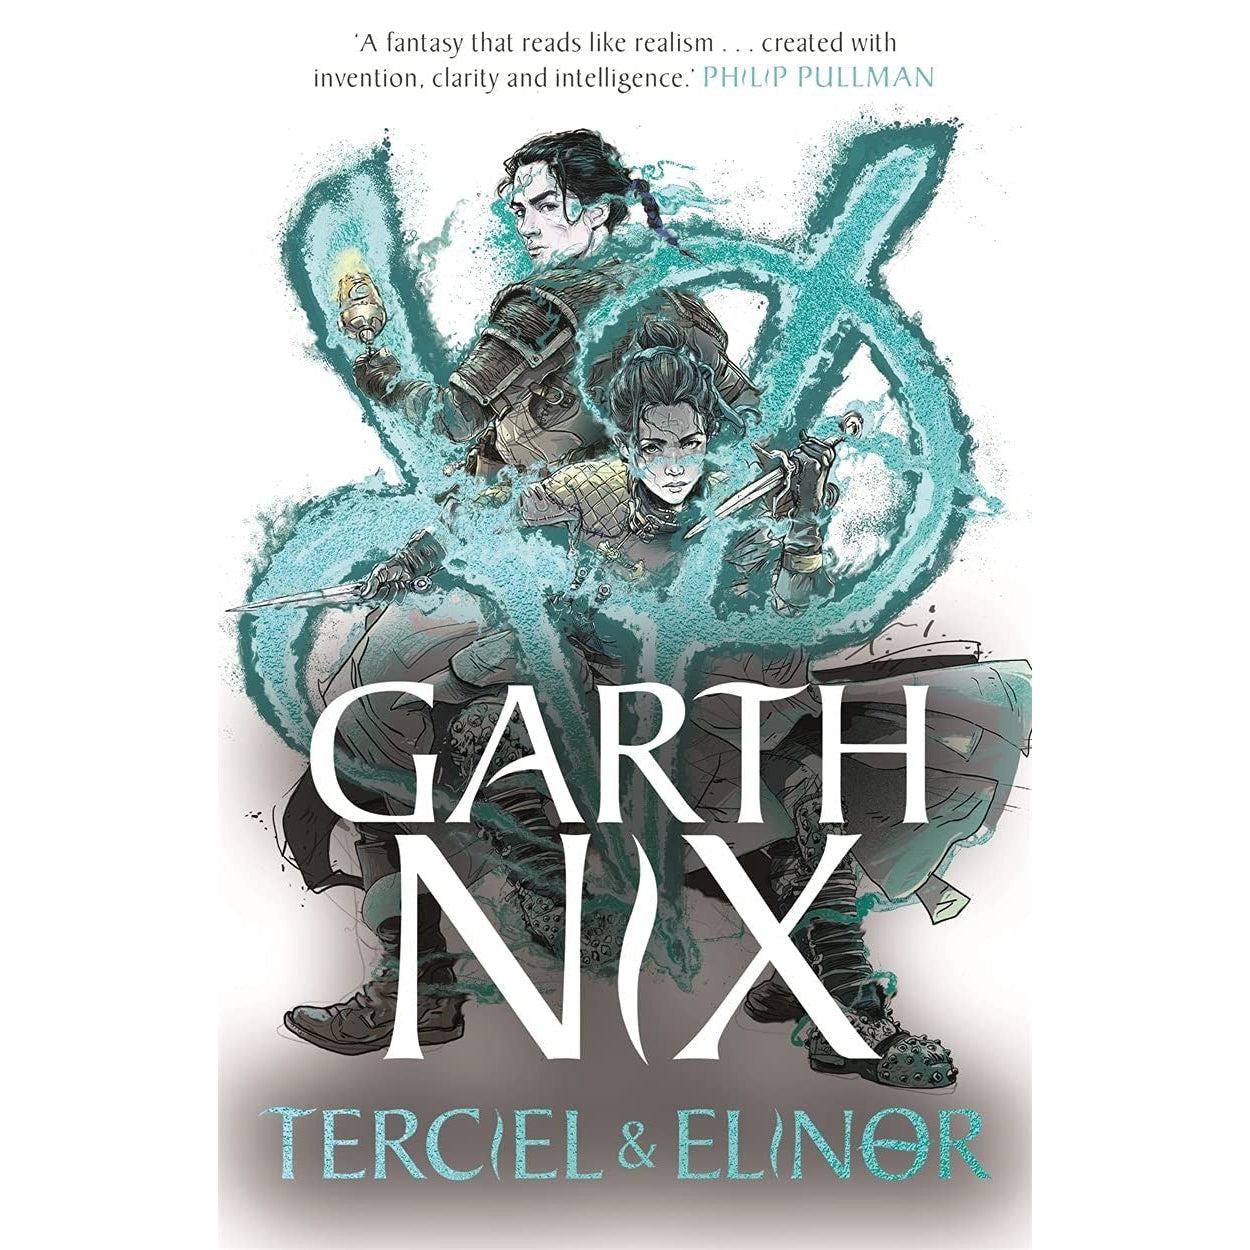 Terciel & Elinor - The Old Kingdom 1: The Newest Adventure In The Bestselling Old Kingdom Series - Garth Nix